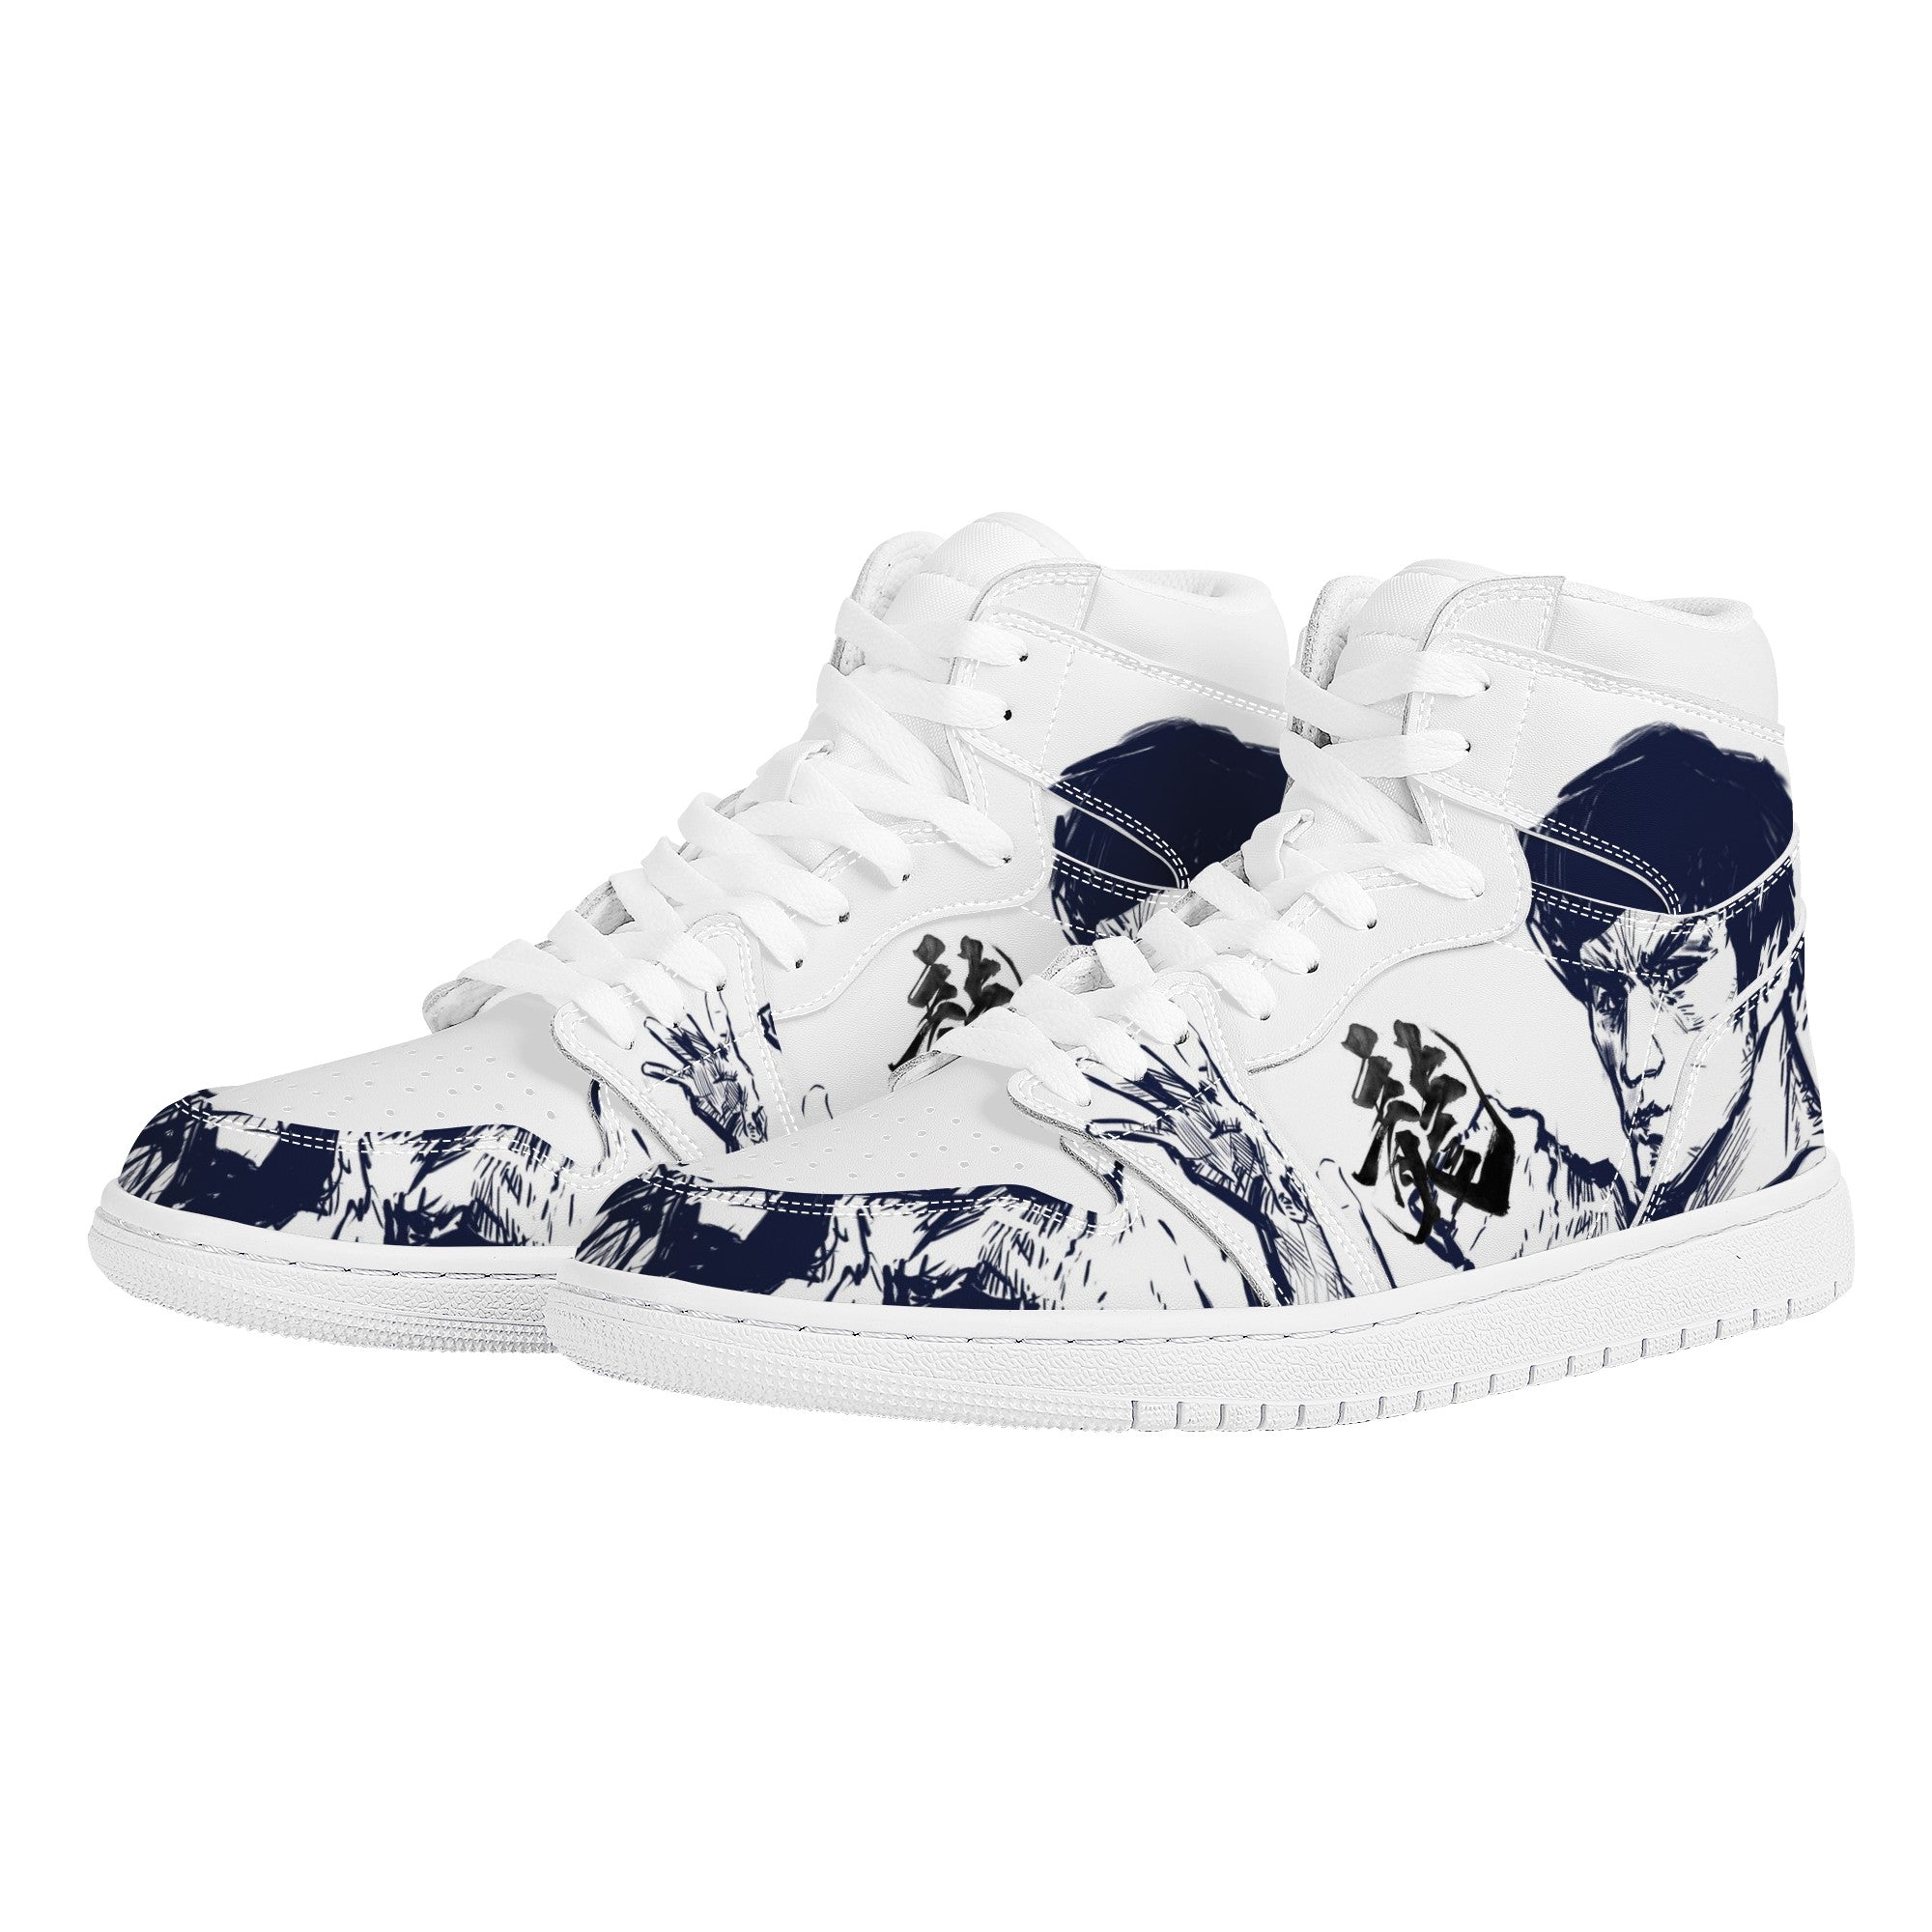 Bruce Lee Custom Nike Air Jordan 1 Leather Sneaker